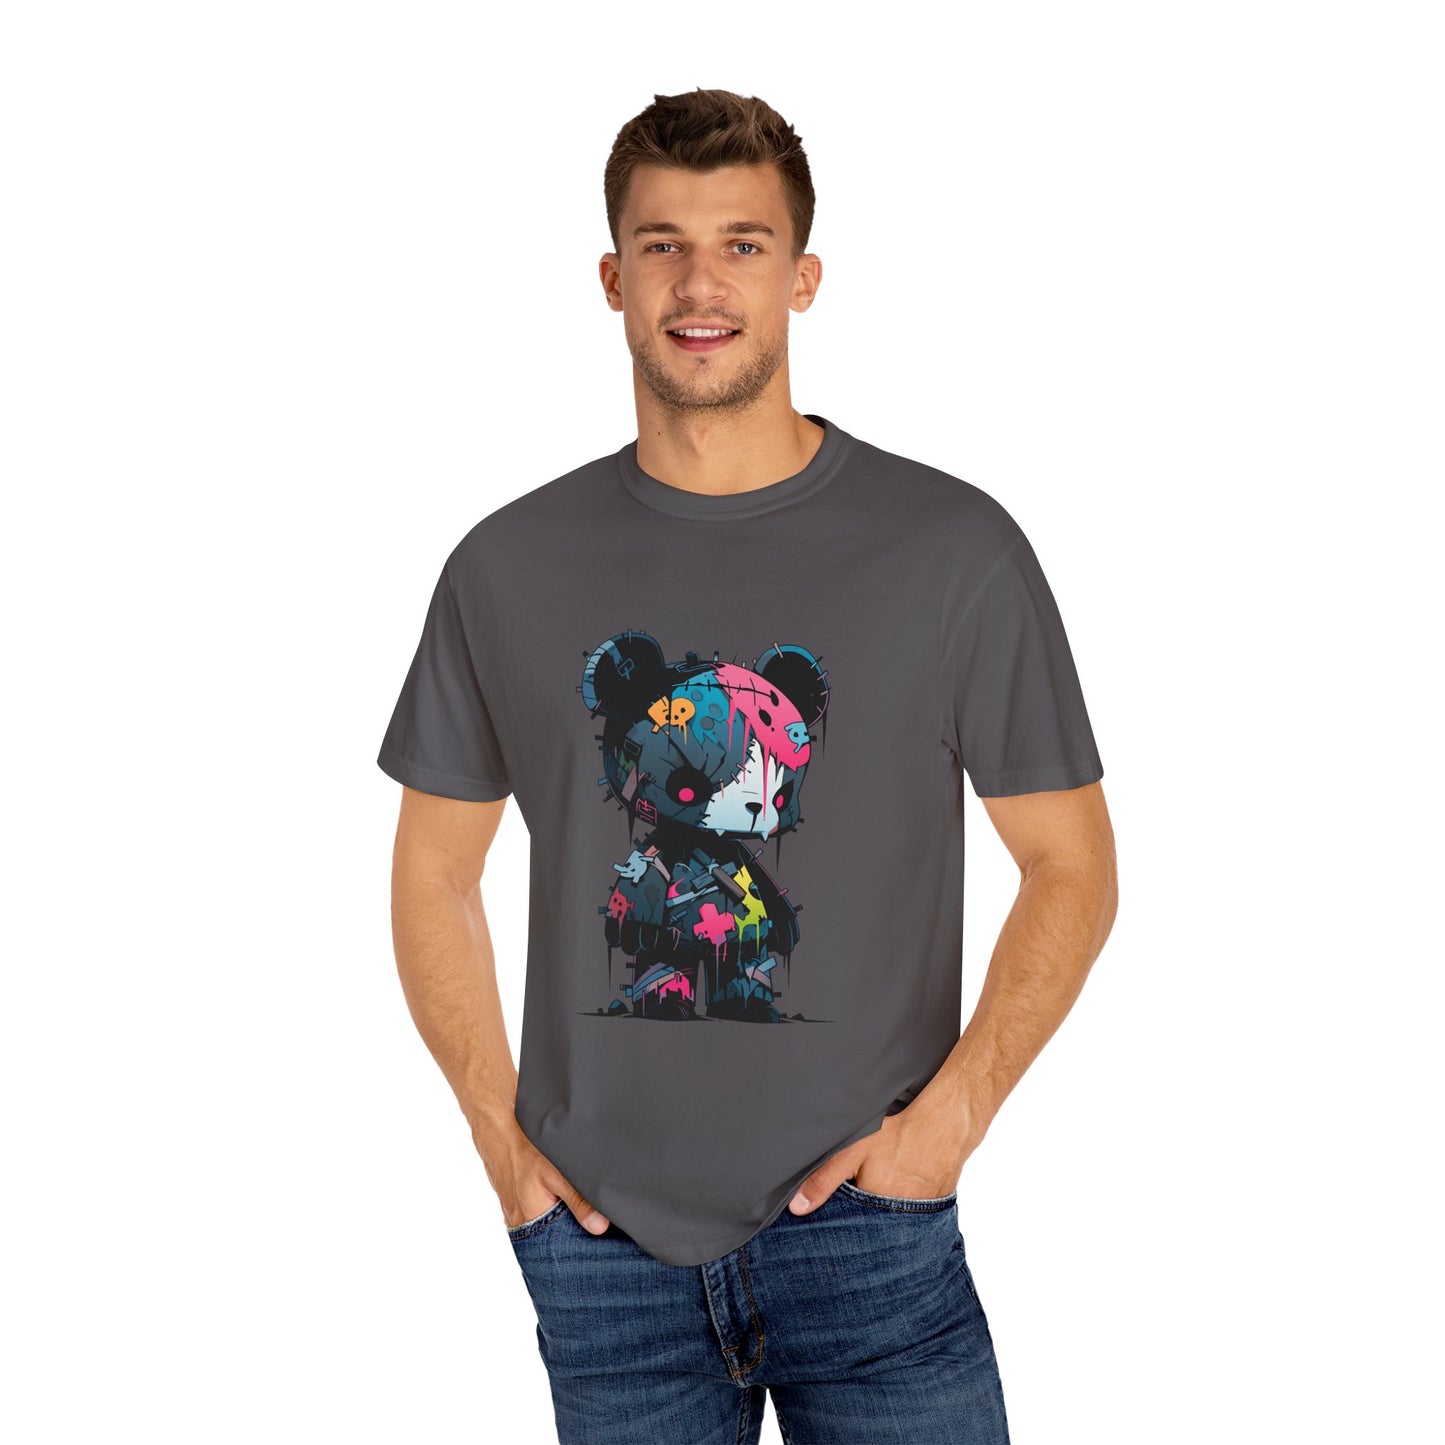 Hip Hop Teddy Bear Graphic Unisex Garment-dyed T-shirt Cotton Funny Humorous Graphic Soft Premium Unisex Men Women Graphite T-shirt Birthday Gift-39